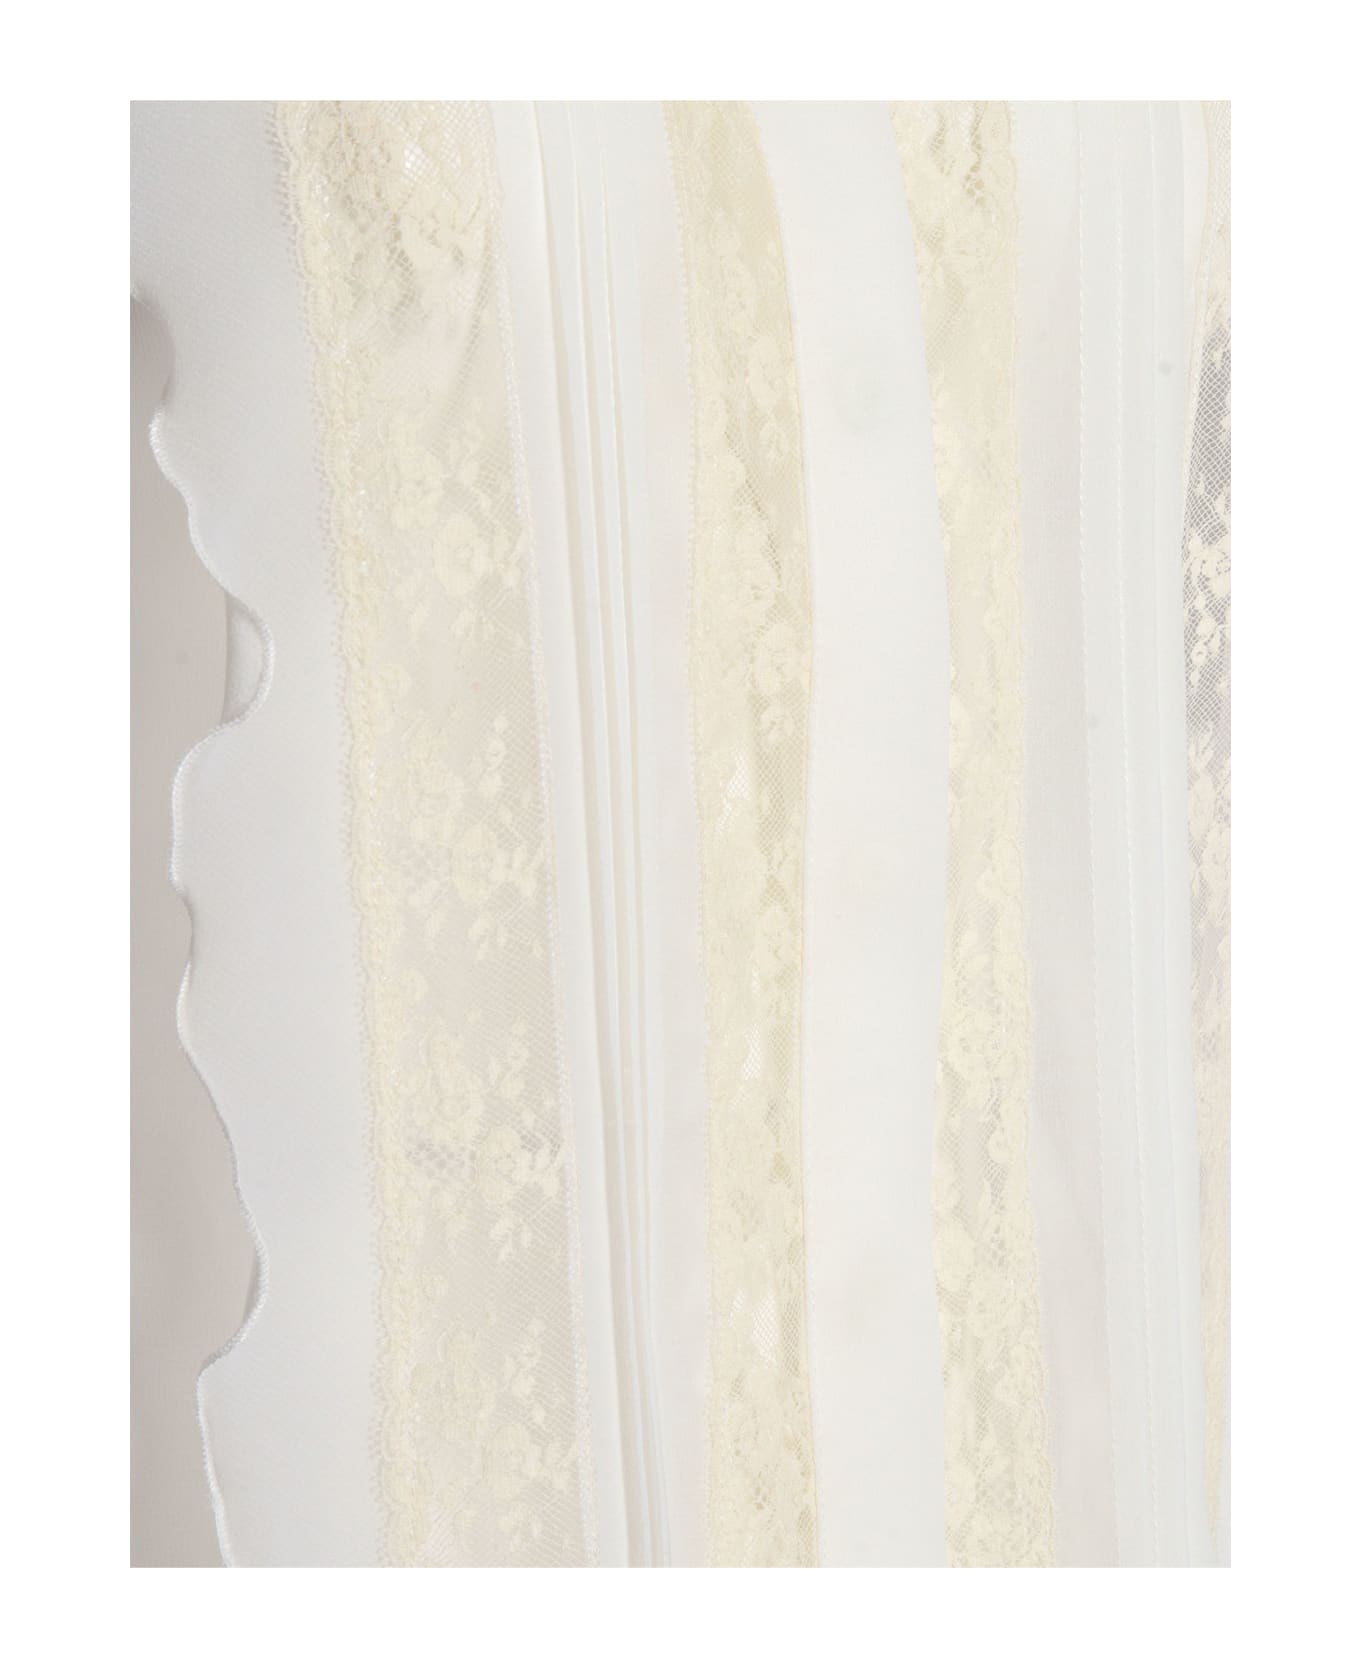 Parosh Sleeveless Shirt With Lace - WHITE ブラウス